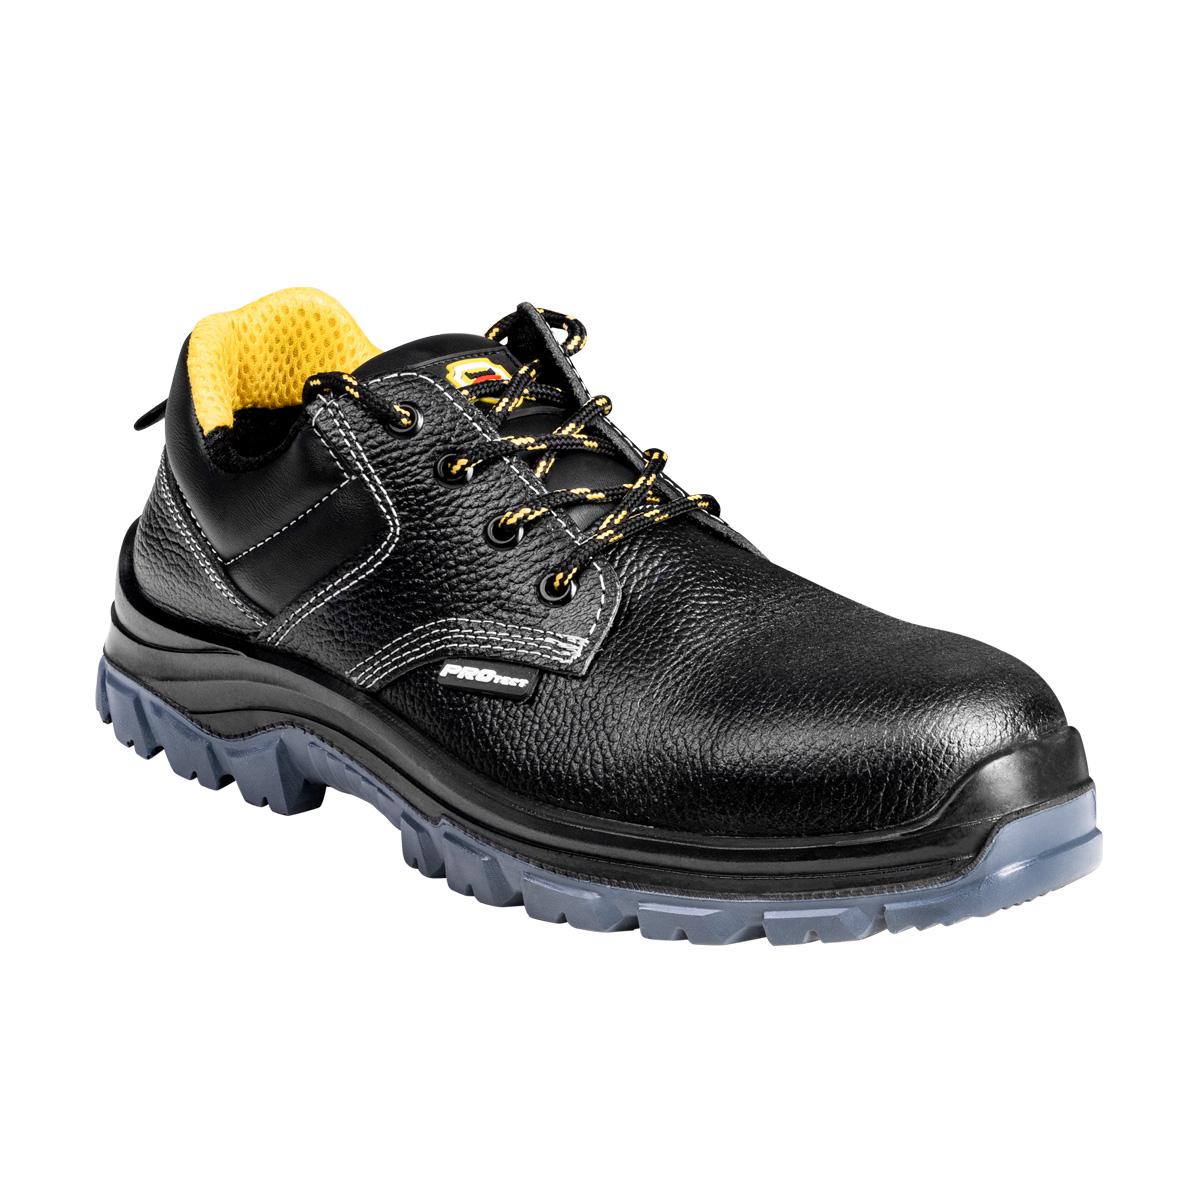 Selected image for PROTECT Plitke zaštitne cipele Craft S1P crne